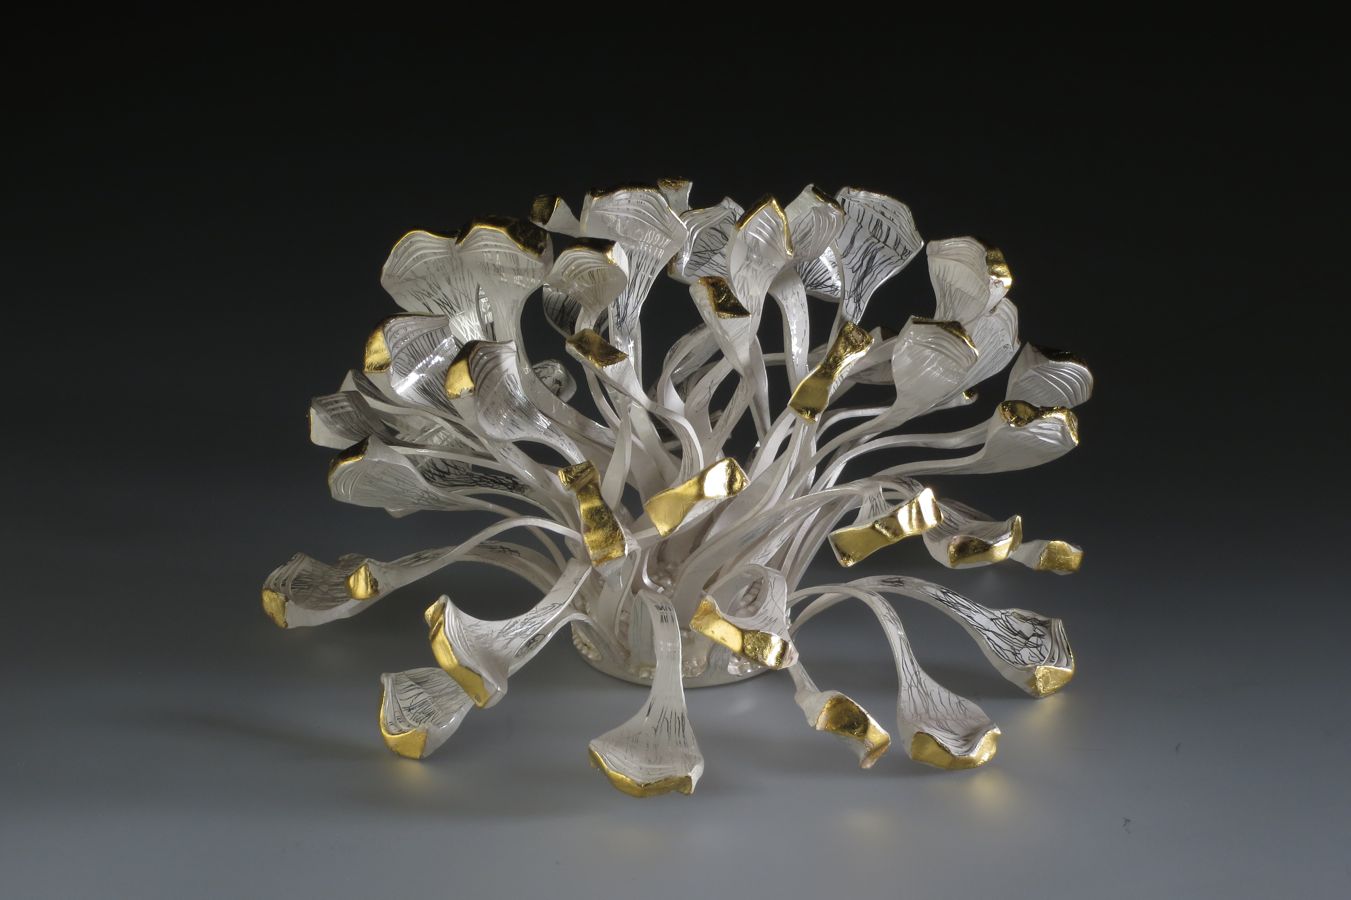 Piece -- materials: silver, gold leaf; dimensions: diameter 15.5, h 10 cm;